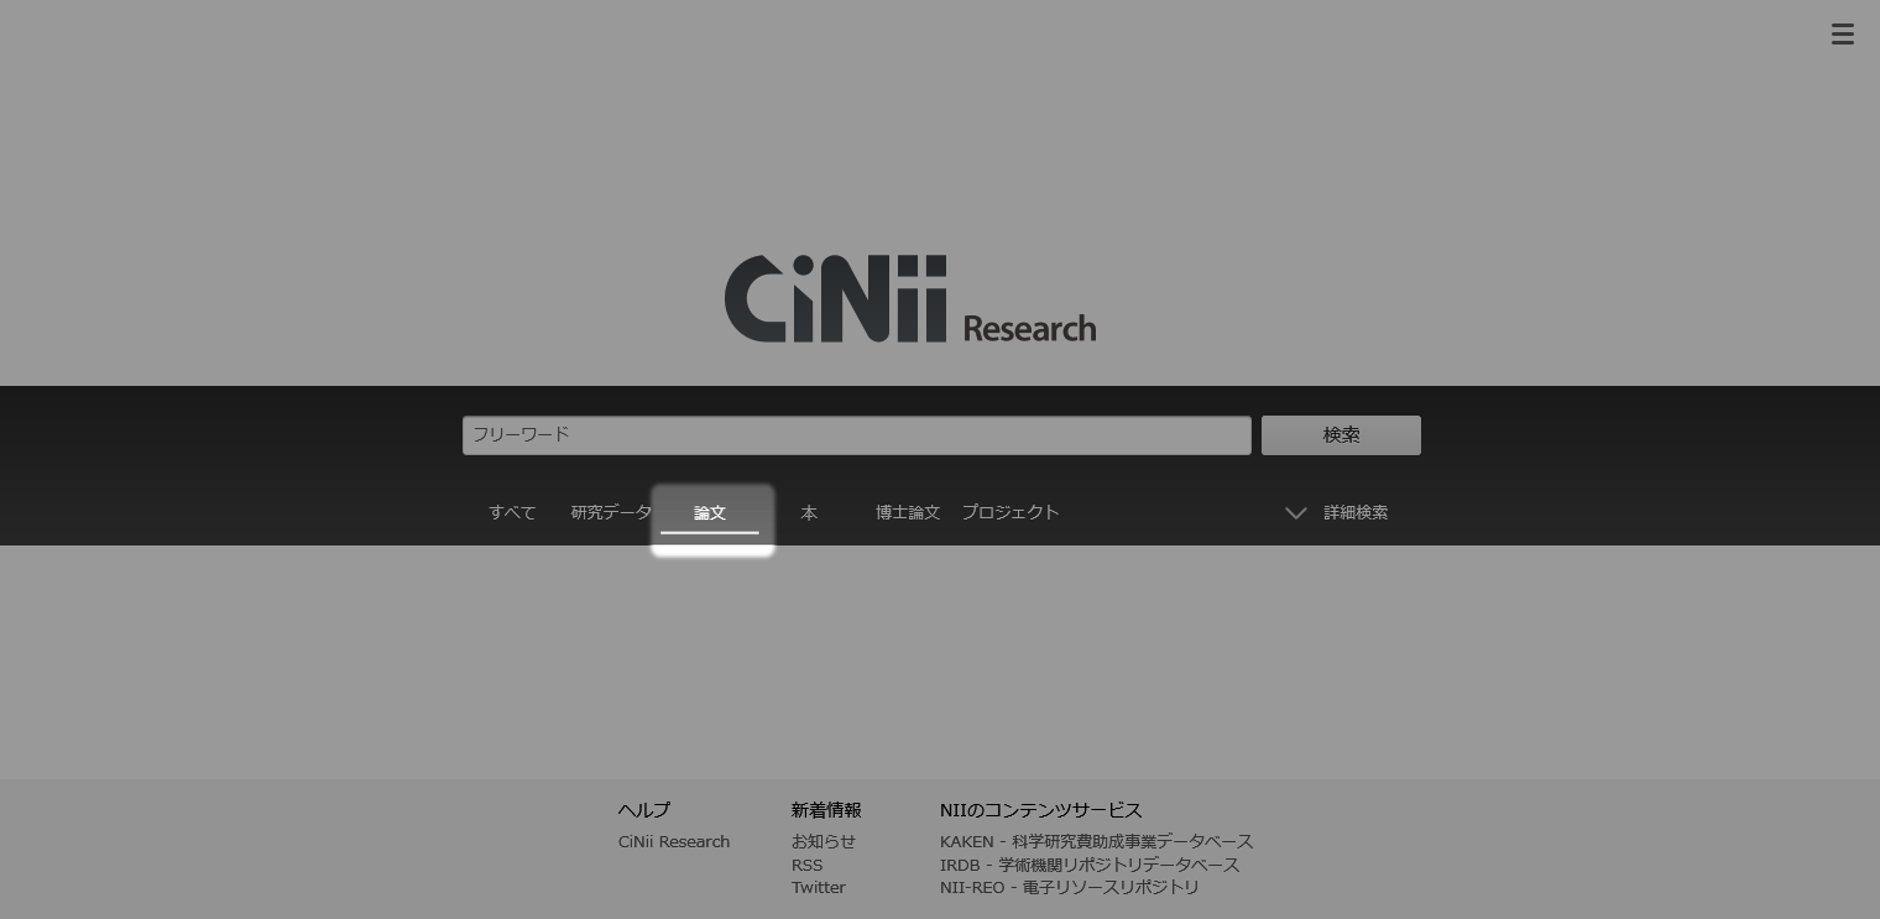 CiNii Research詳細検索画面